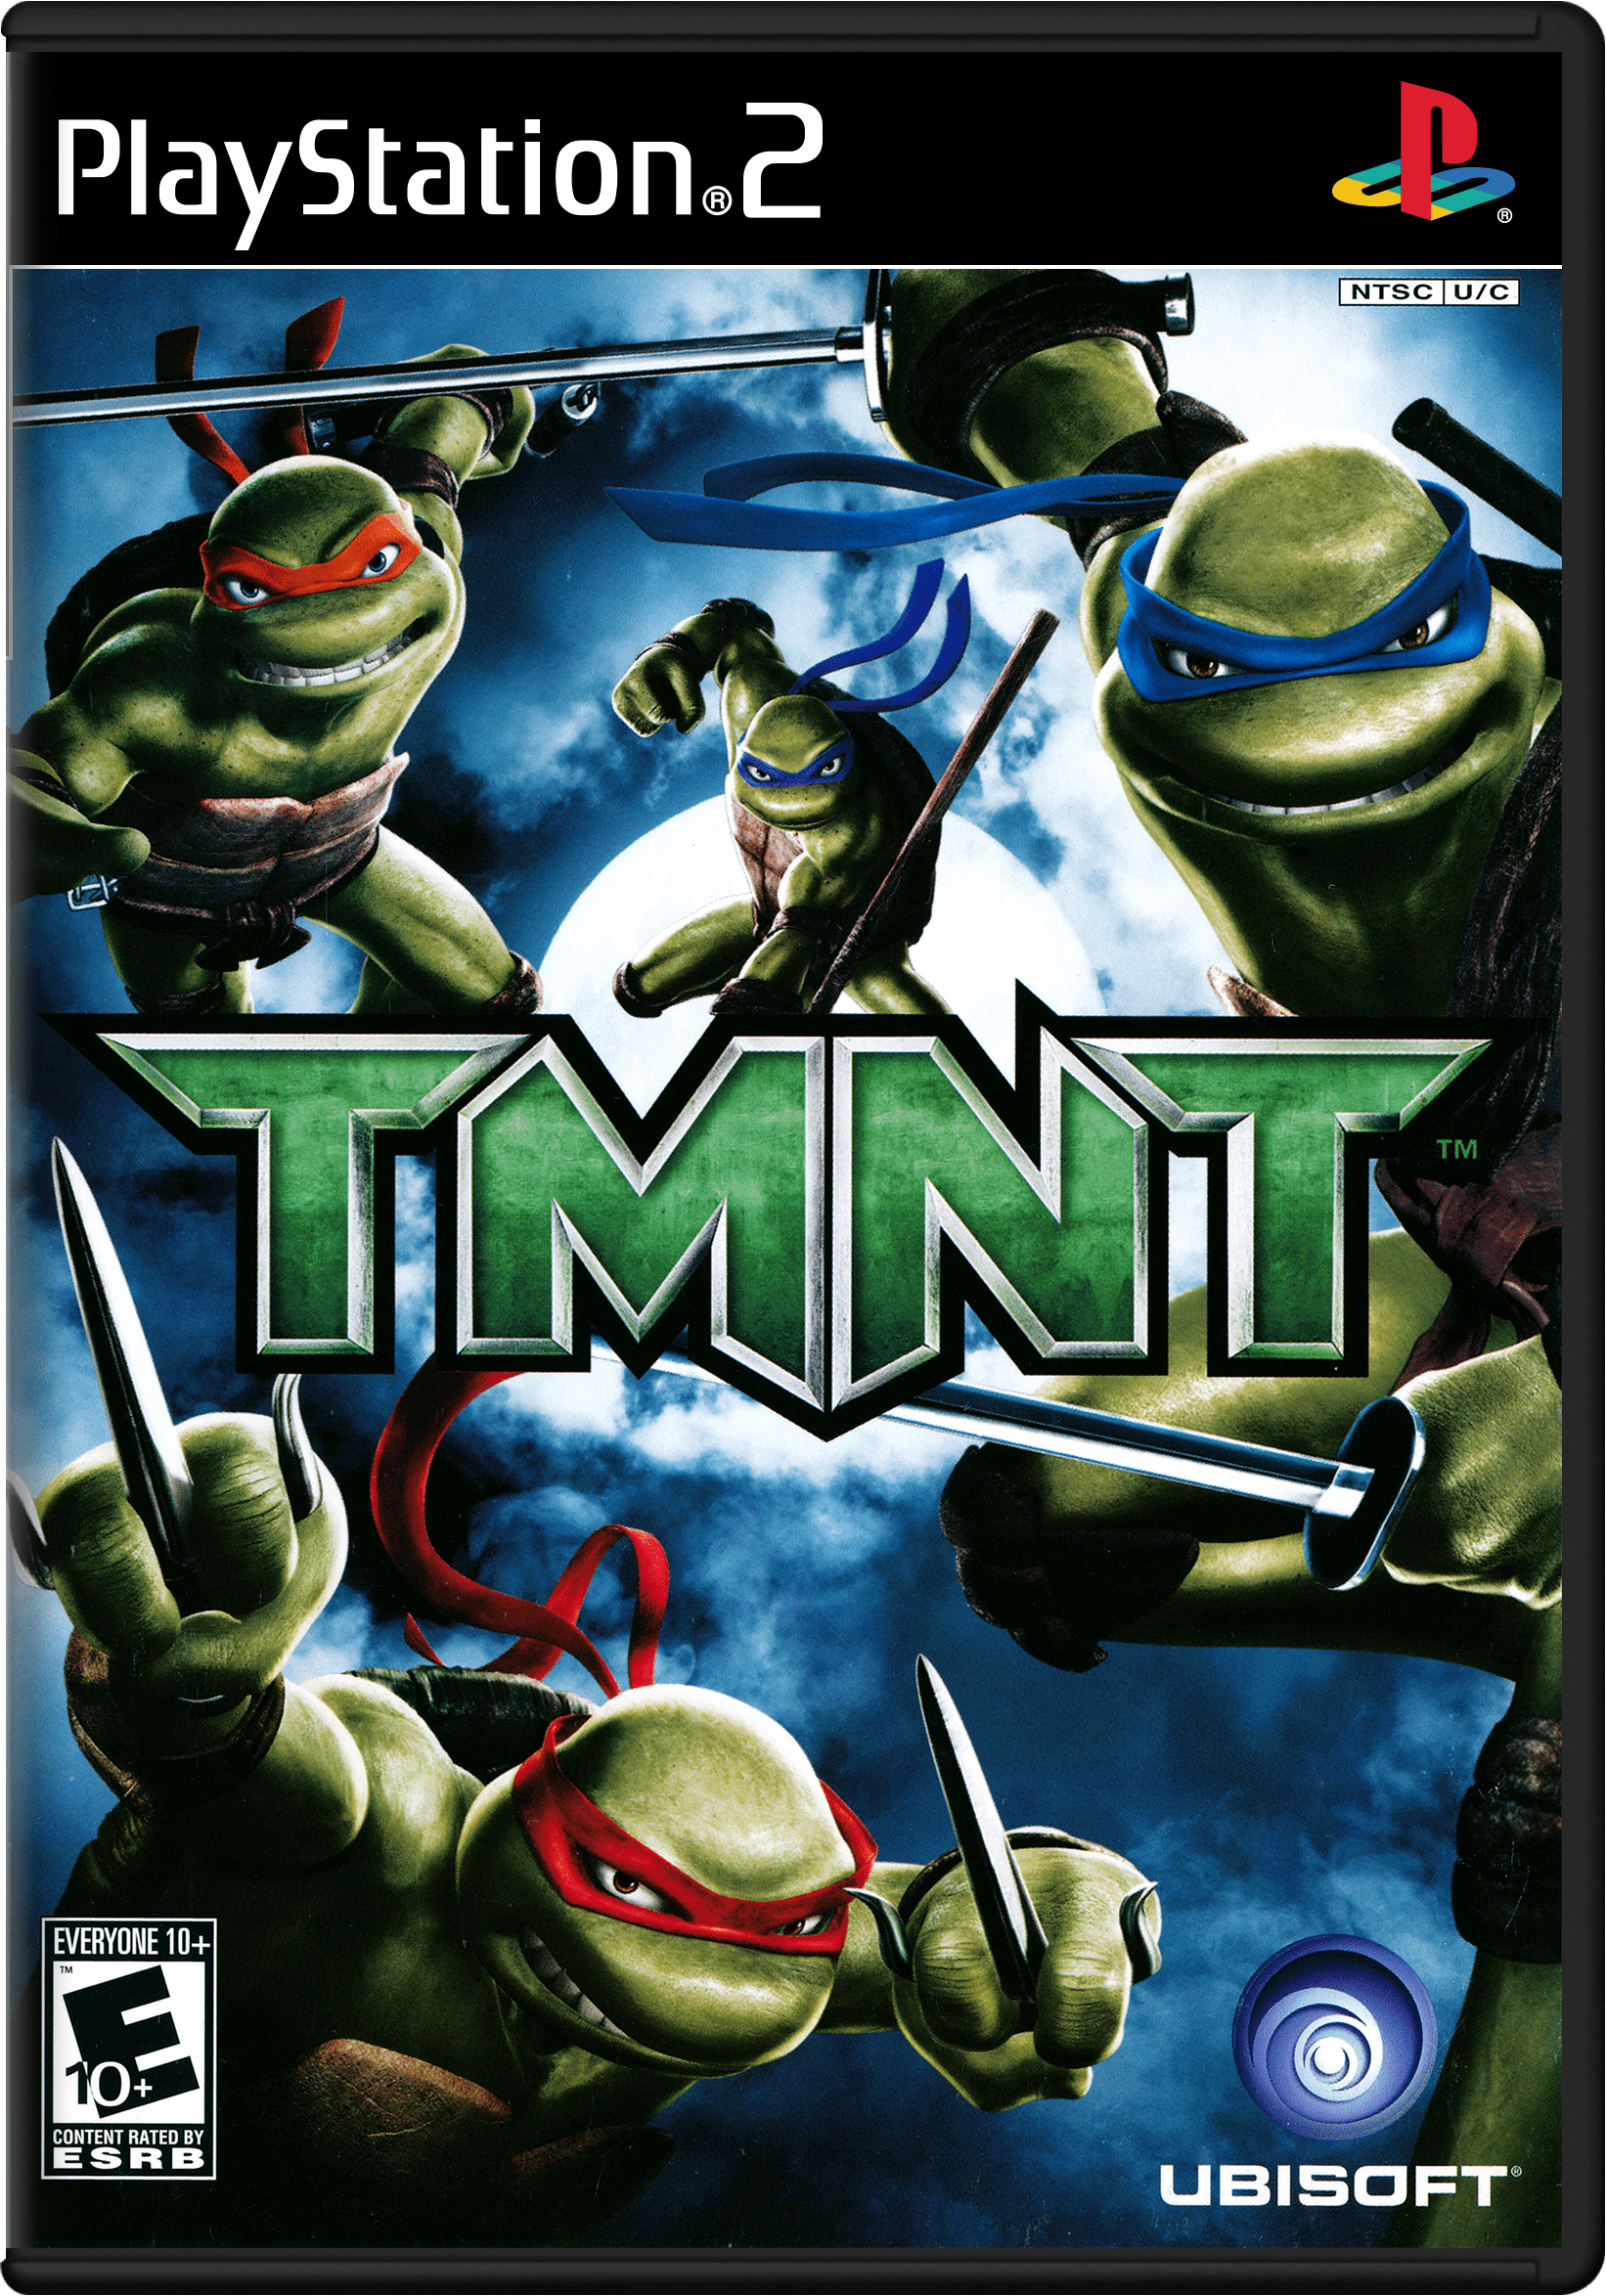 Tmnt играть. Teenage Mutant Ninja Turtles ps2. PLAYSTATION 2 Черепашки ниндзя. Teenage Mutant Ninja Turtles 2 ps2. TMNT 2007 ps2.